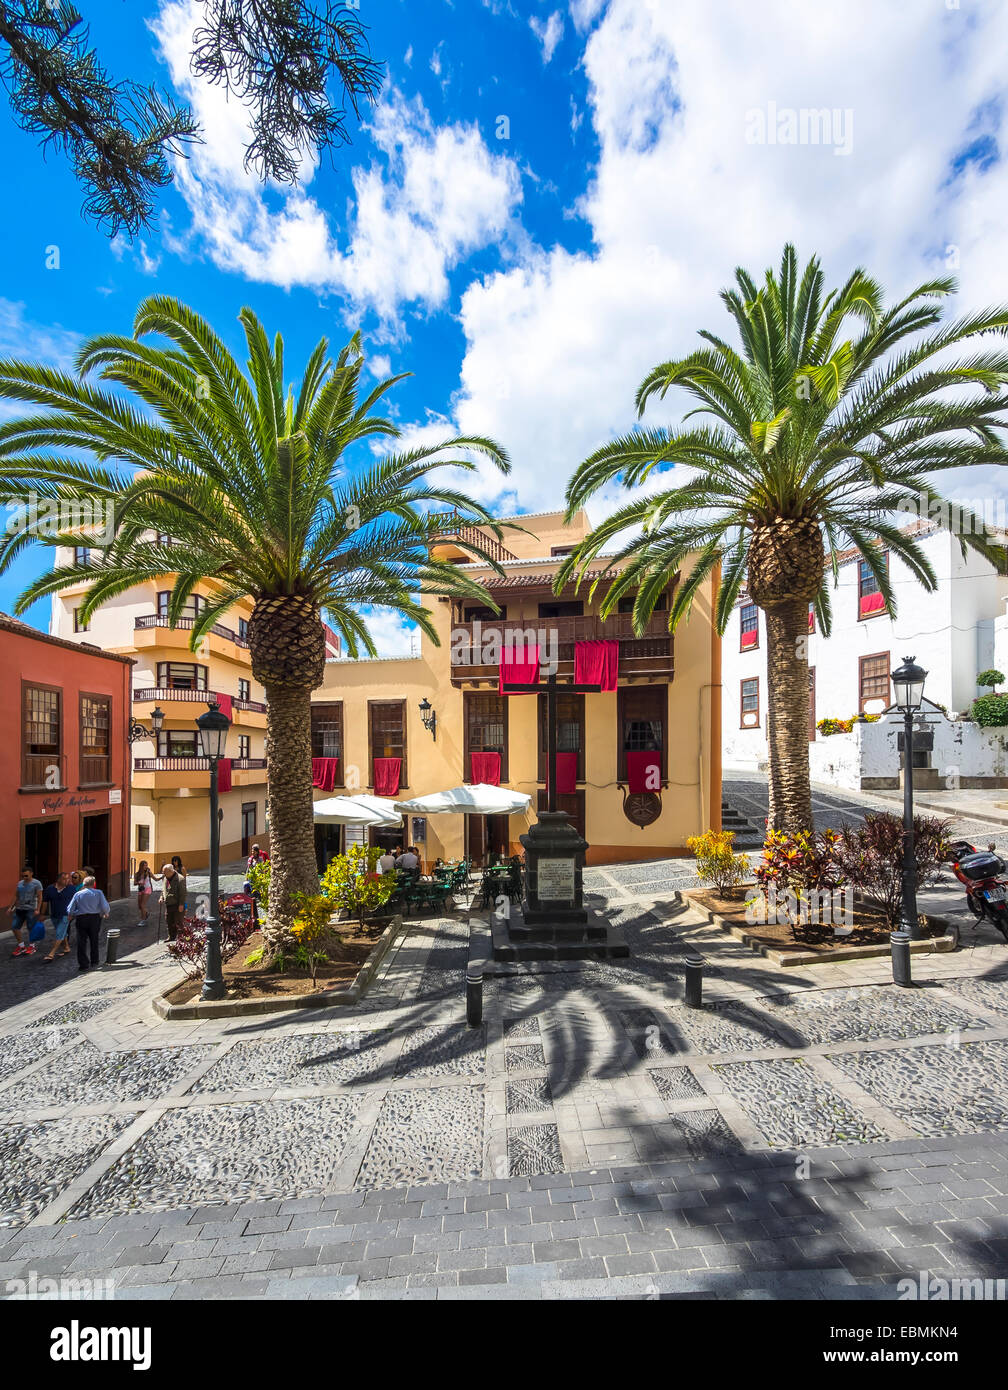 Plaza de La Alameda, Santa Cruz de La Palma, La Palma, Canary Islands, Spain Stock Photo